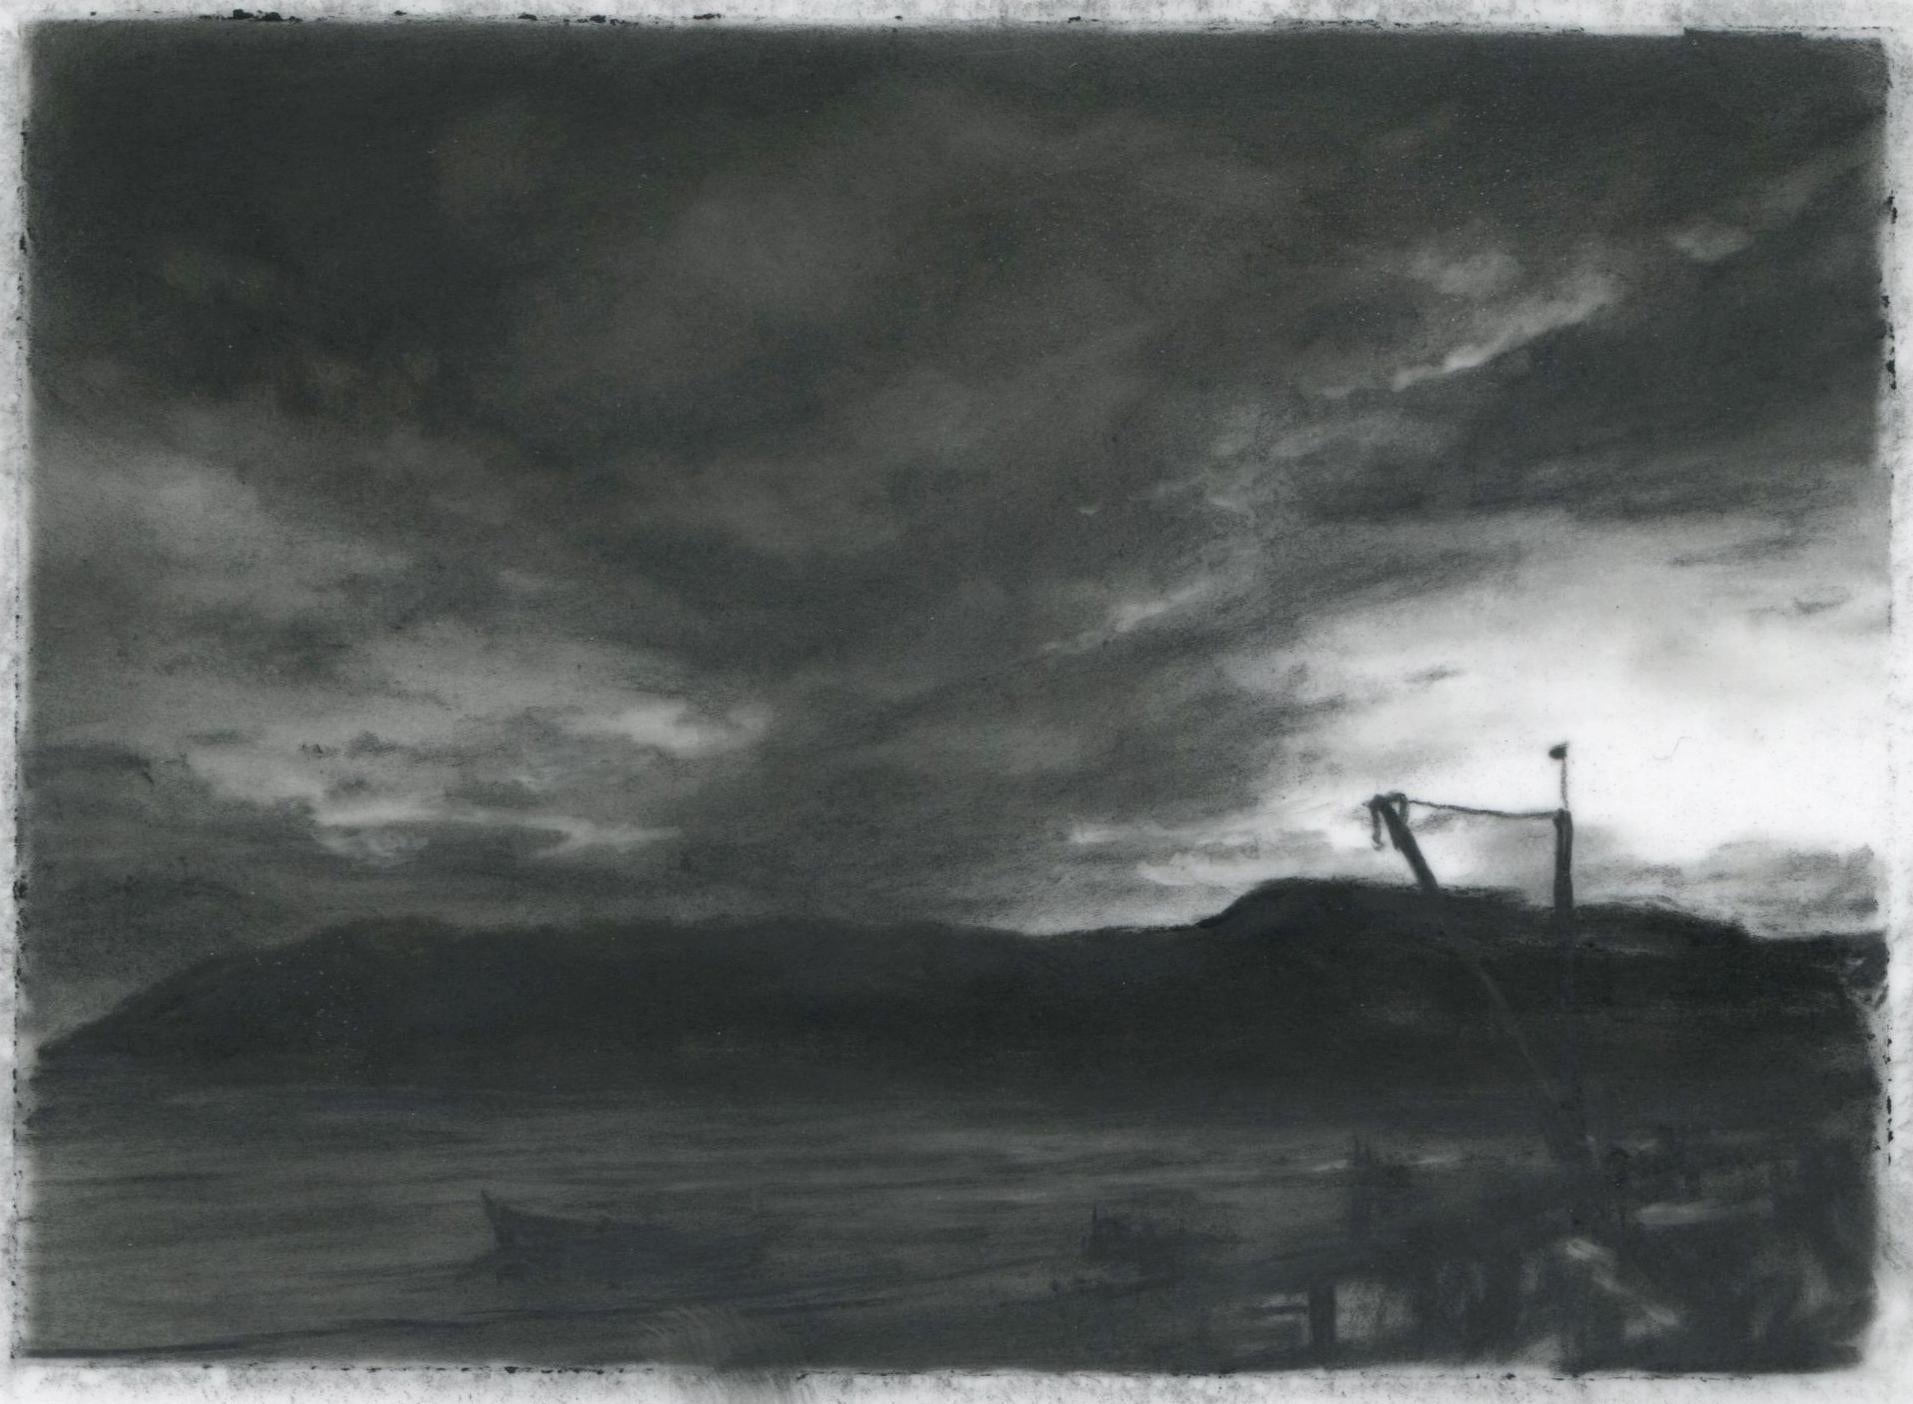 Dozier Bell Landscape Art - Monhegan, dock, realist black and white charcoal landscape drawing